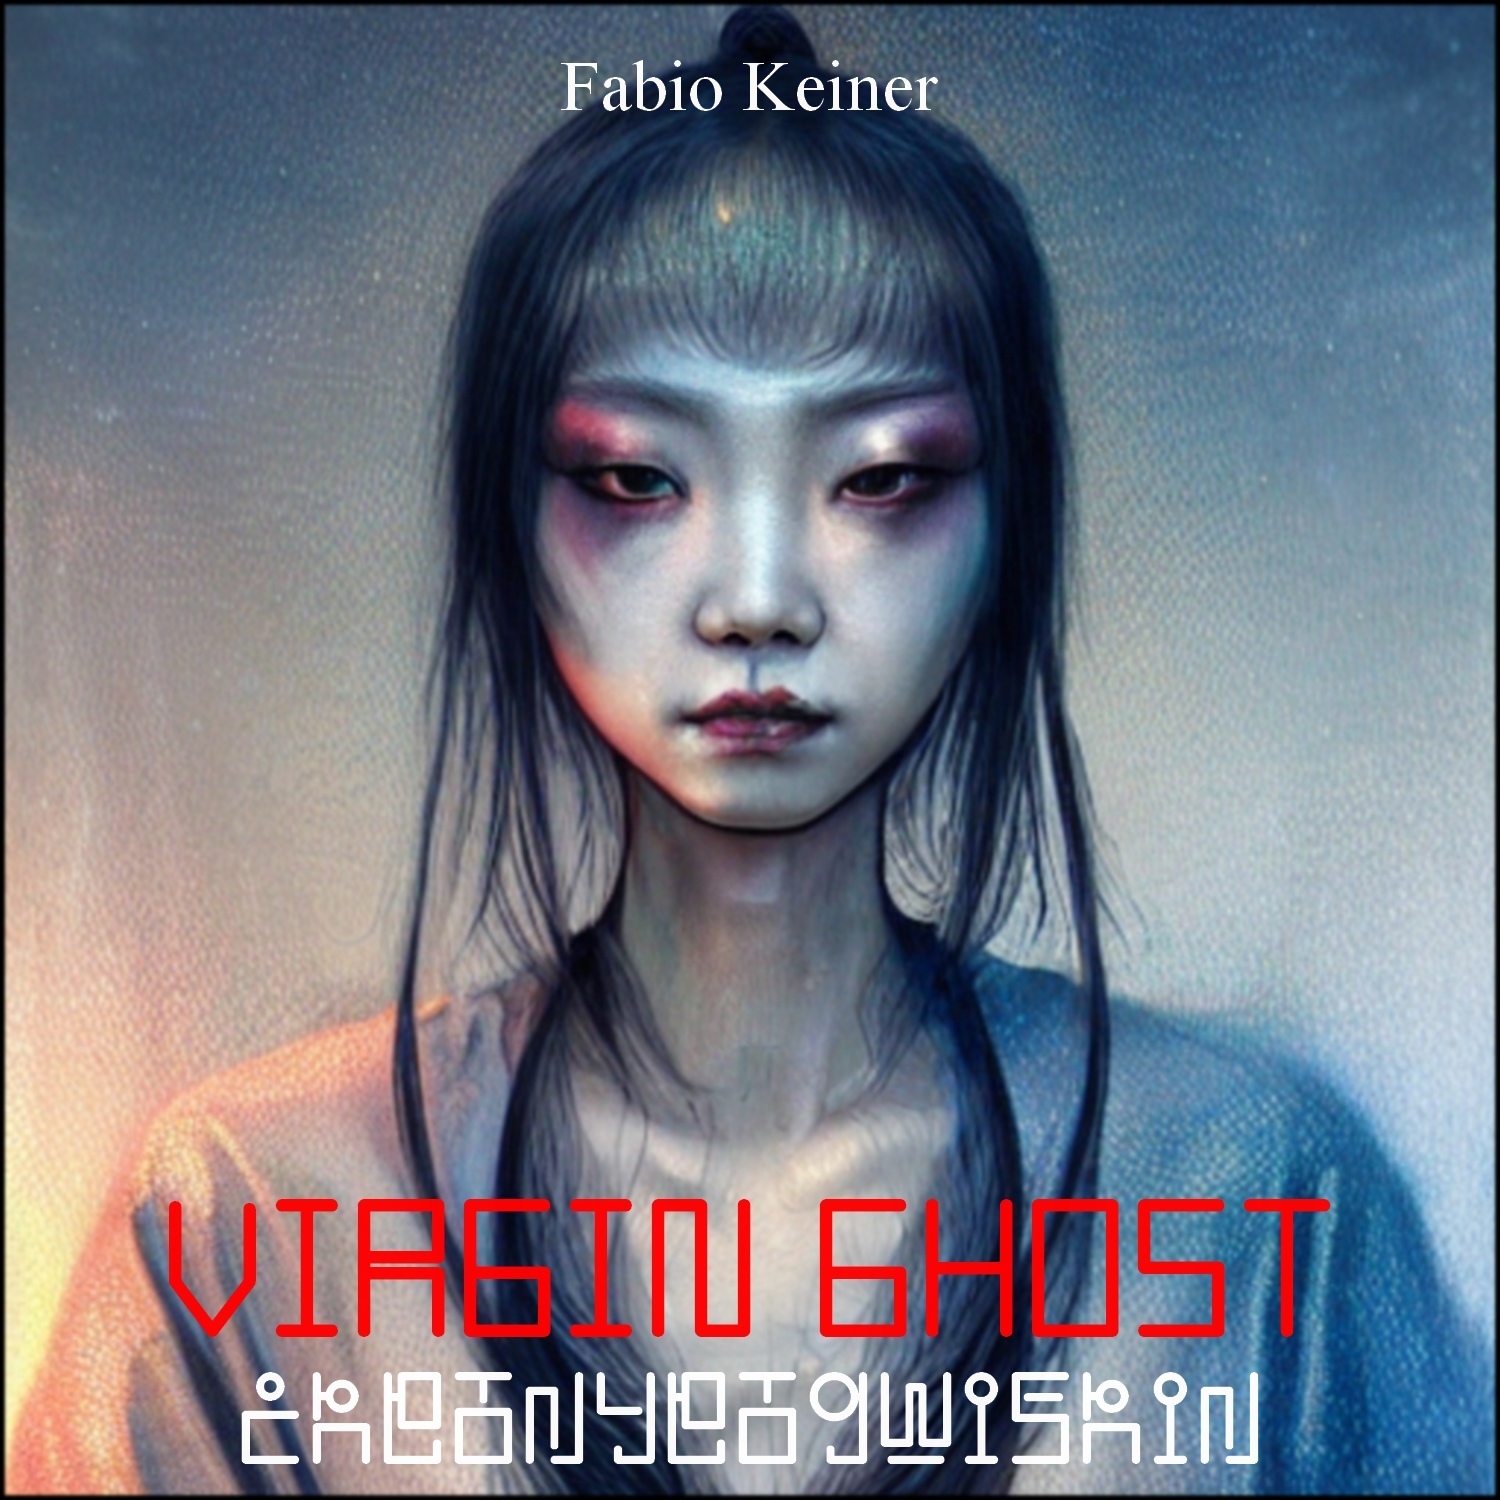 Fabio Keiner – Virgin Ghost